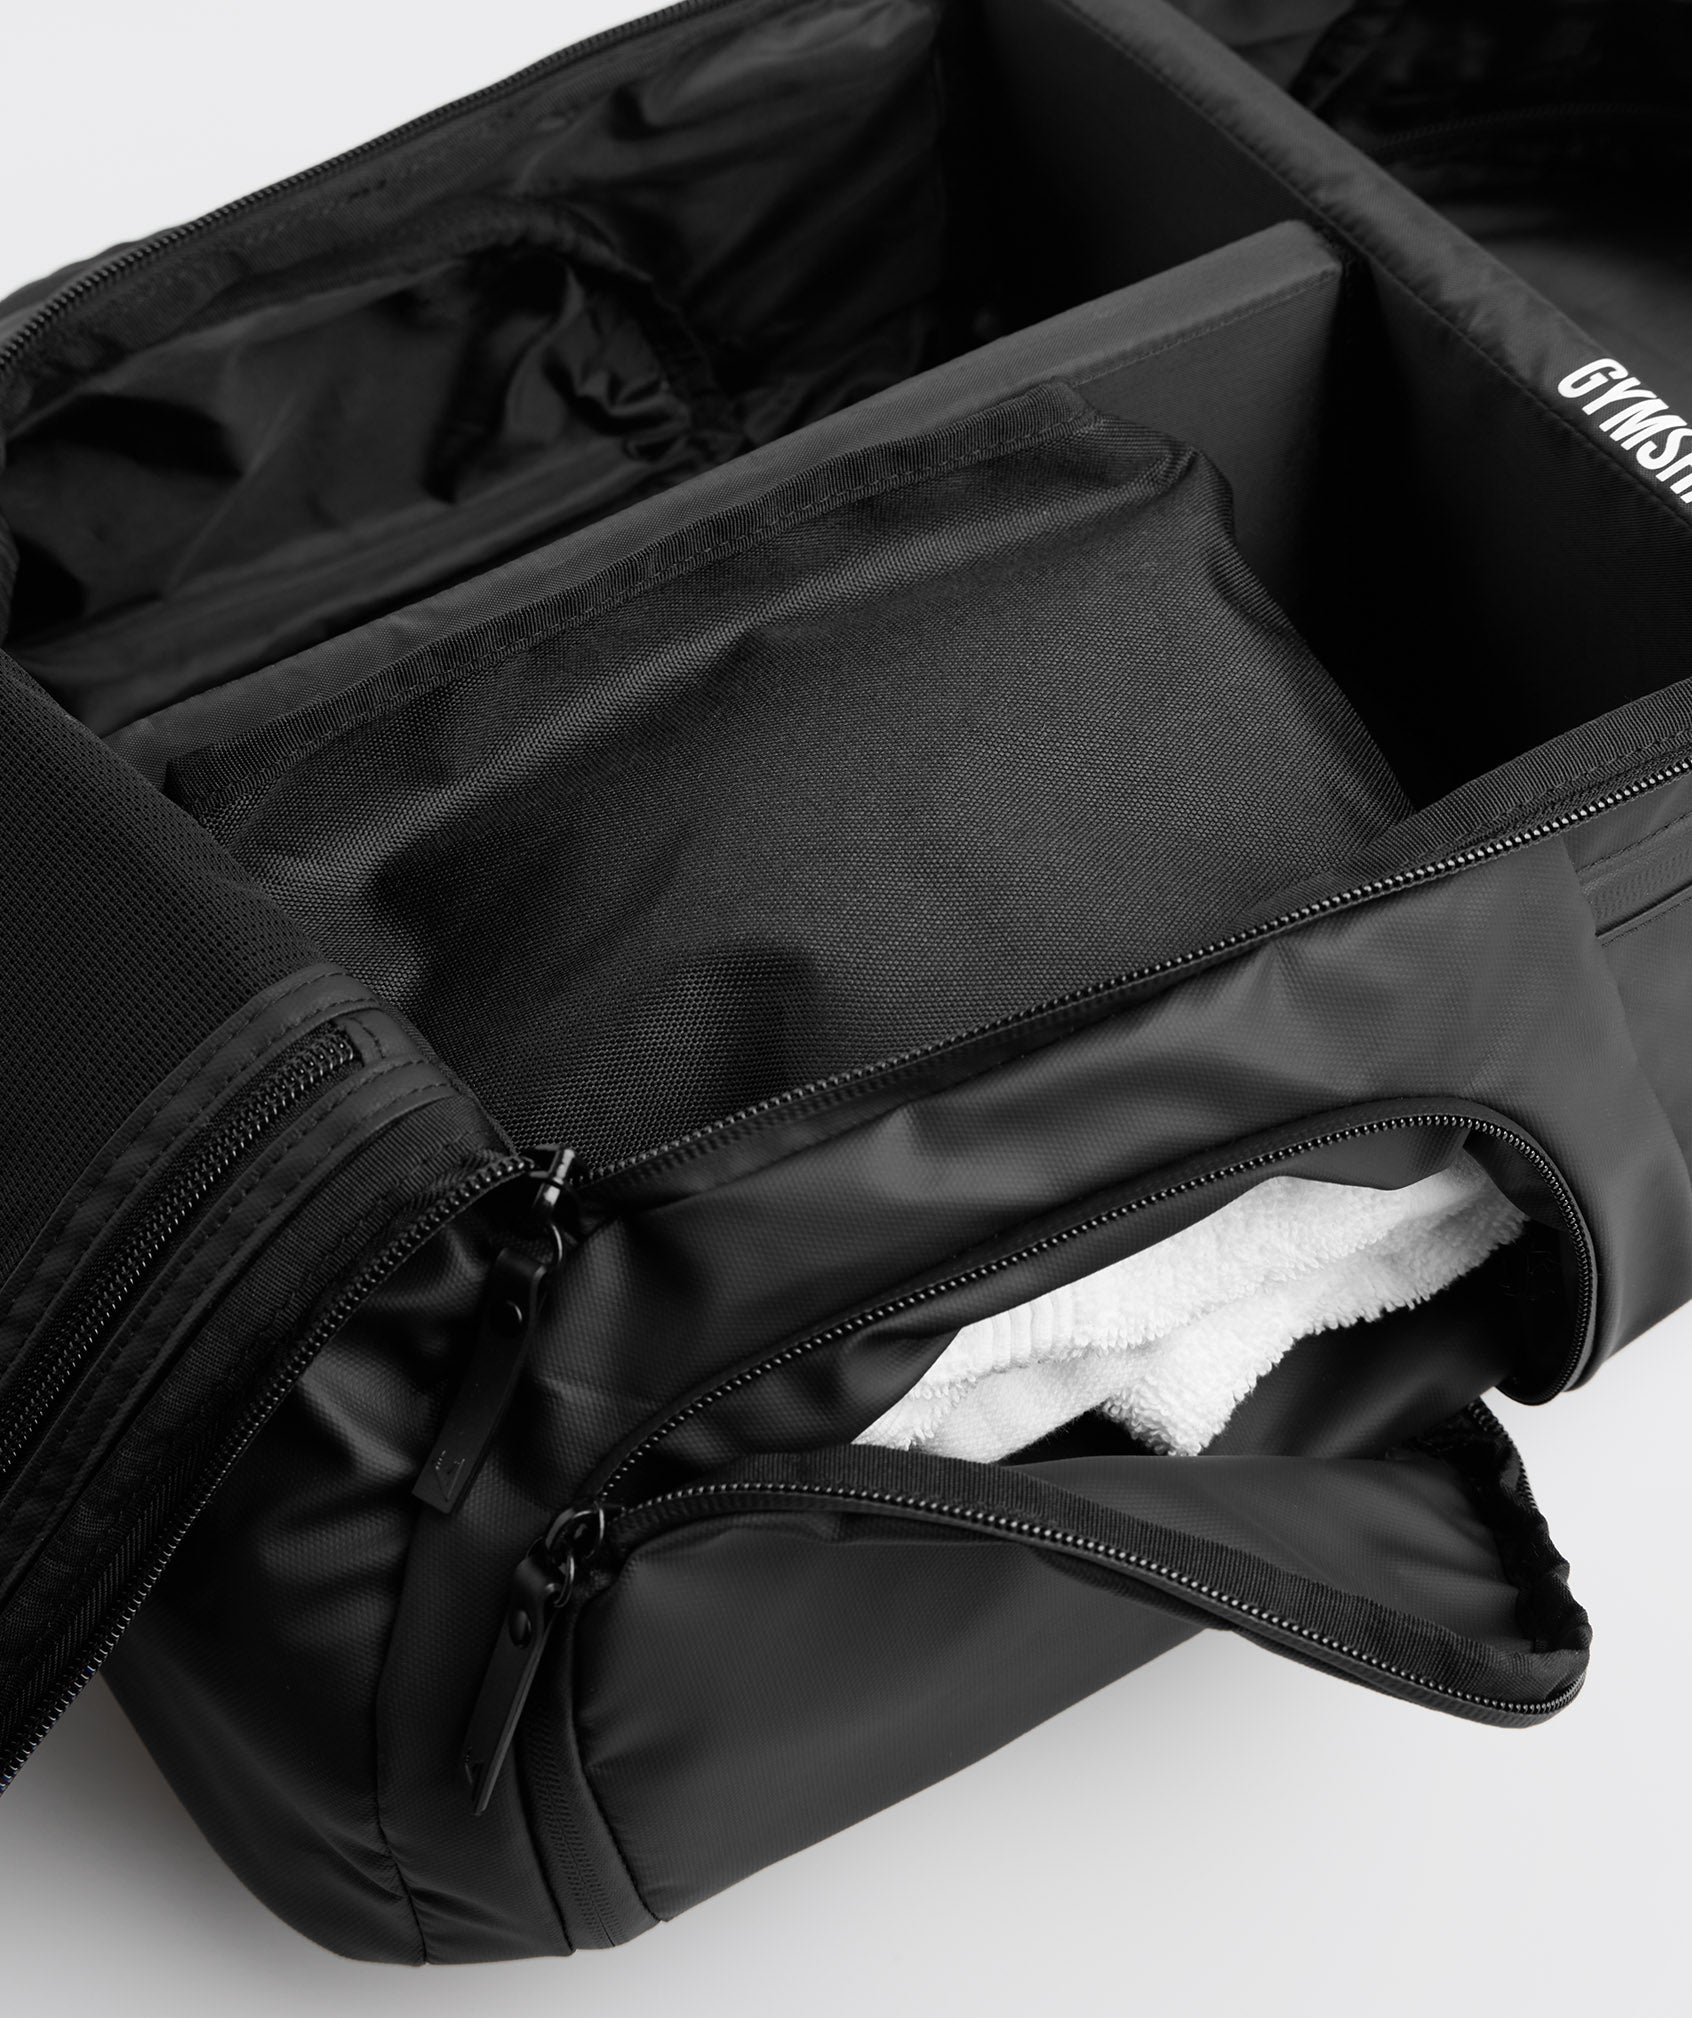 X-Series 0.3 Backpack in Black - view 9